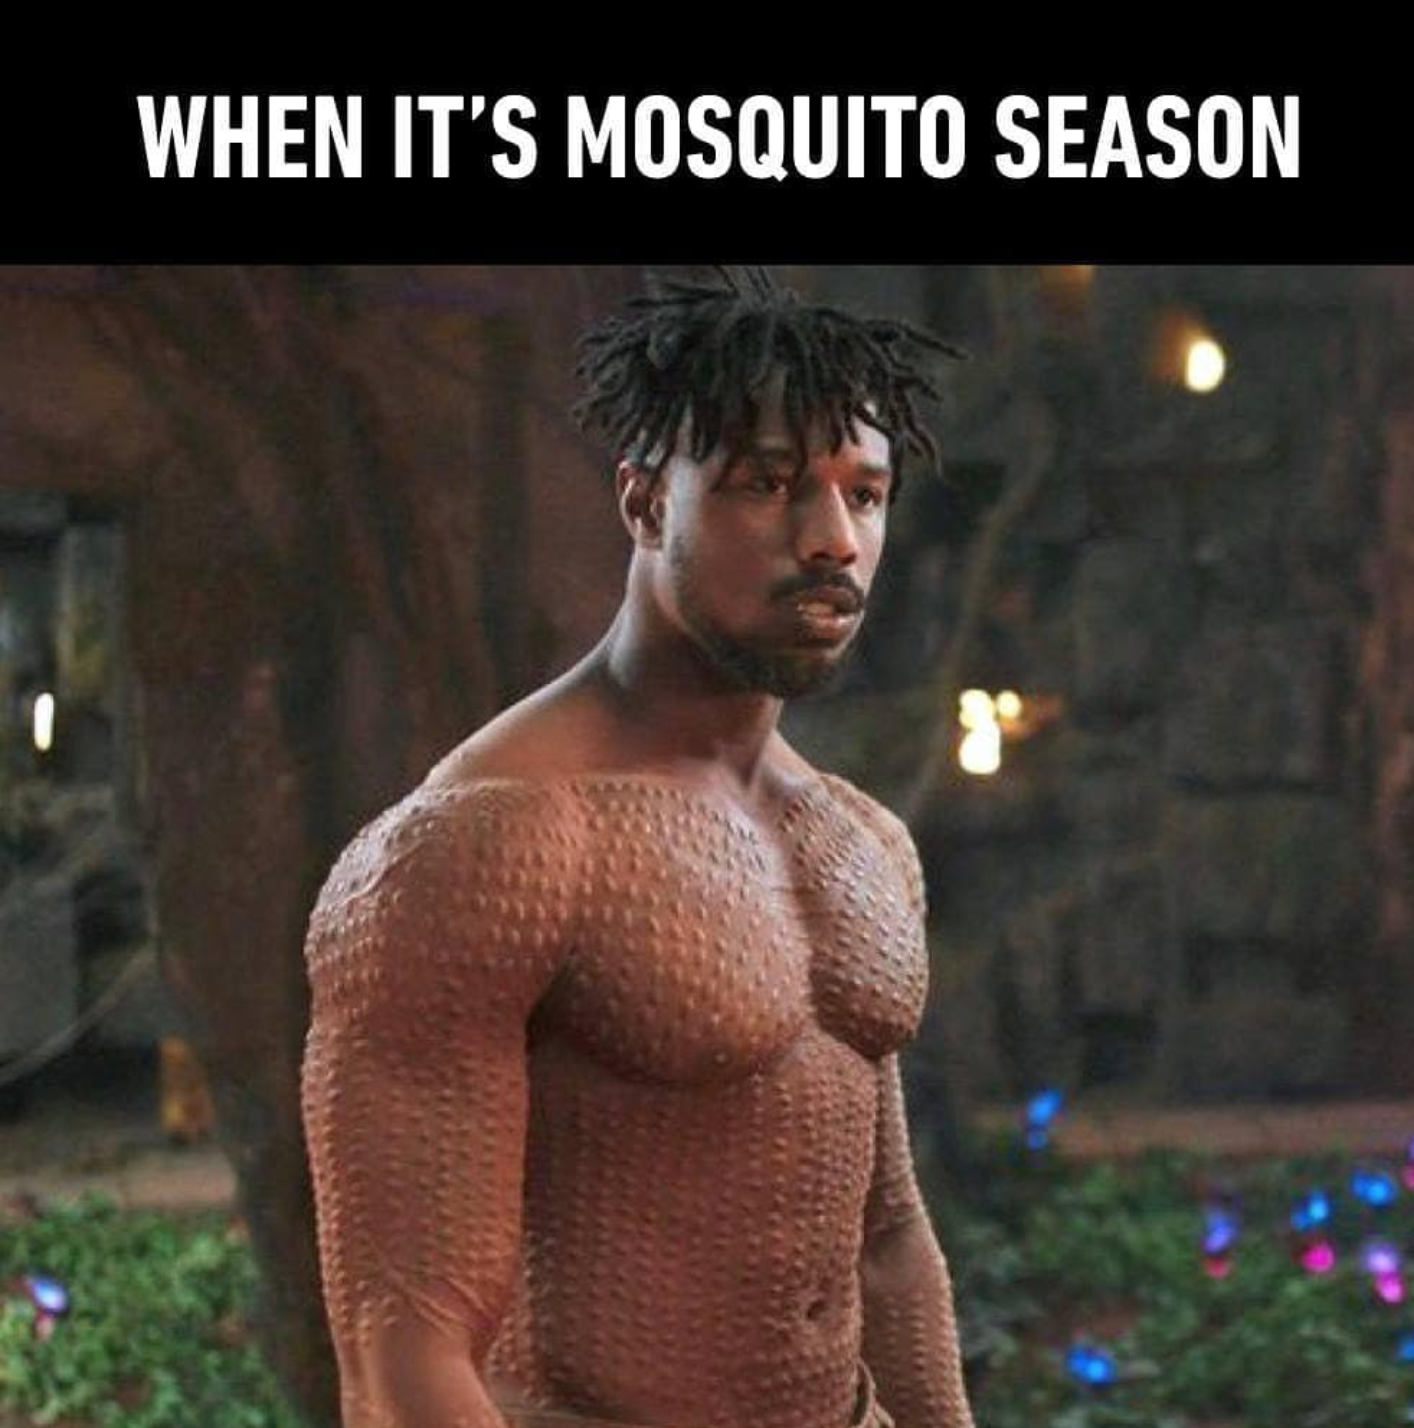 When mosquito season starts